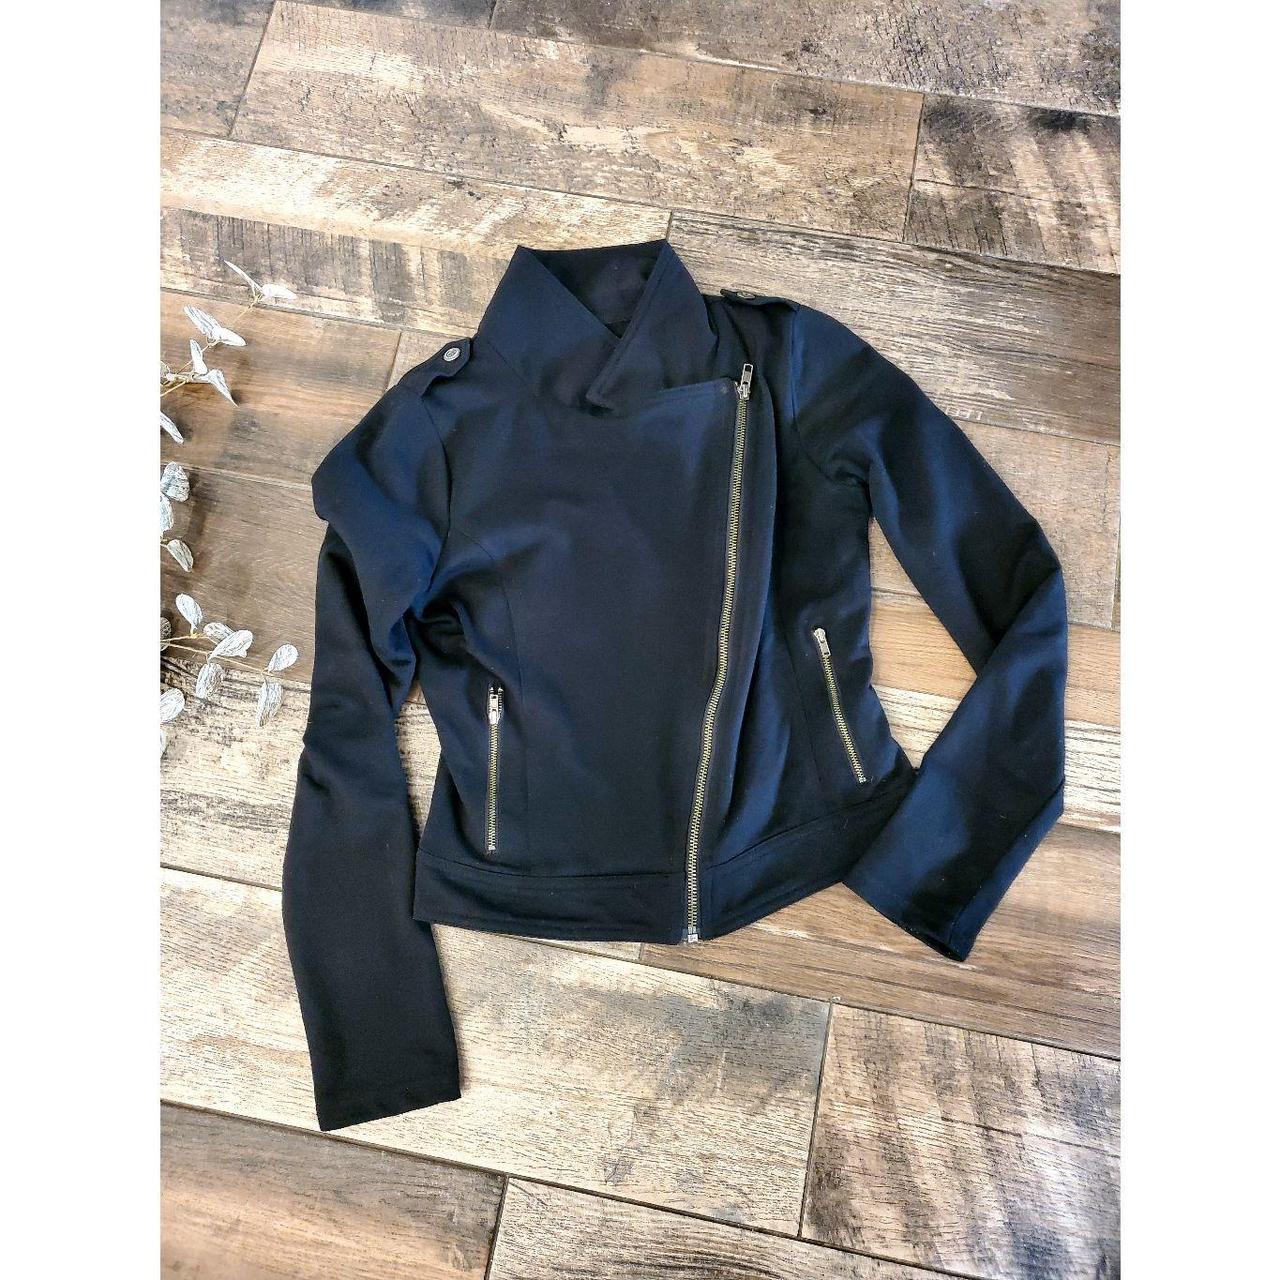 Product Image 3 - Black side zipper lightweight jacket